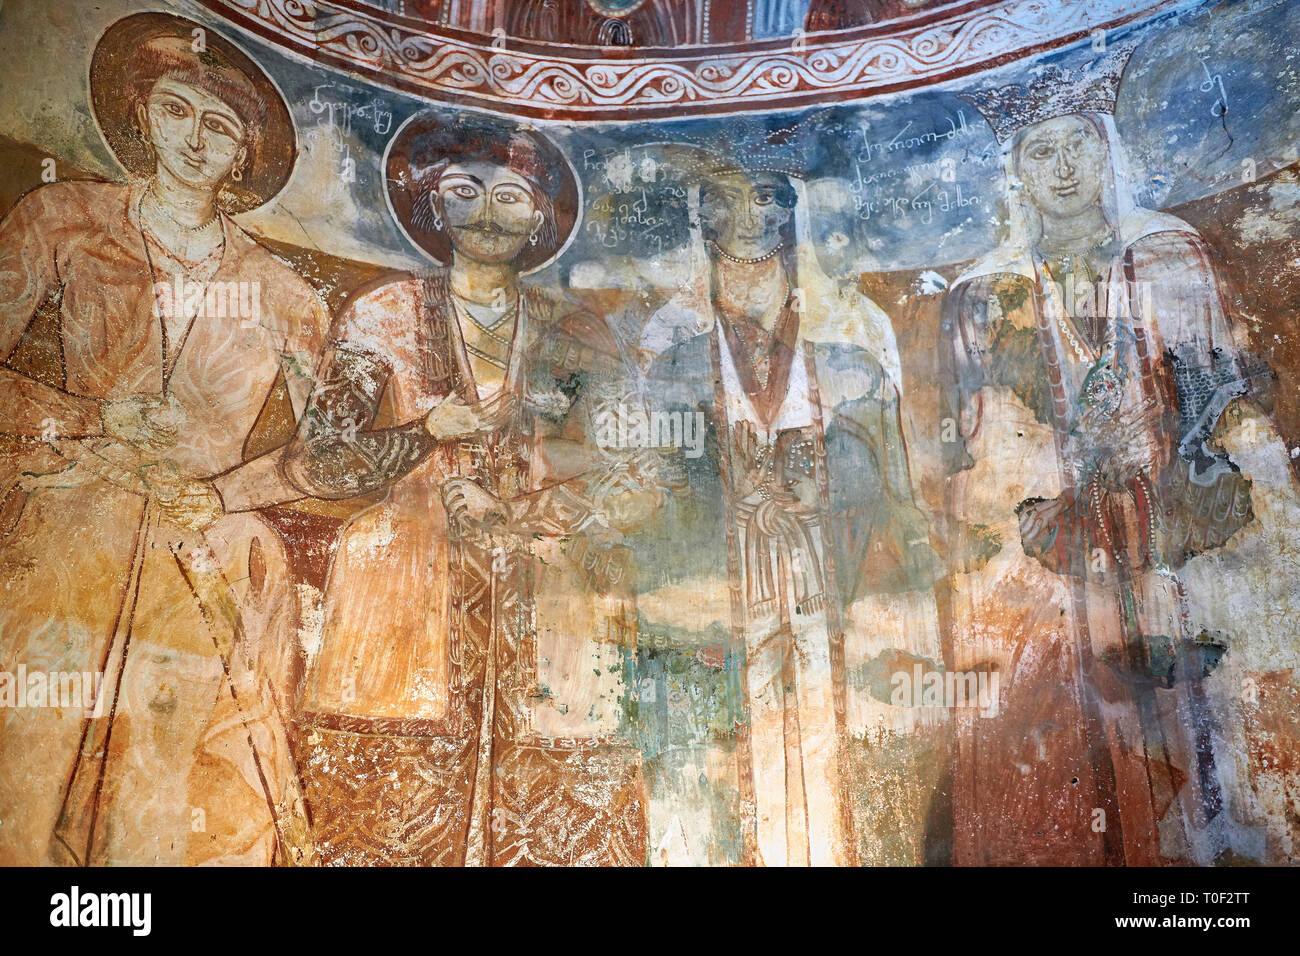 Pictures & images of Nikortsminda ( Nicortsminda ) St Nicholas Georgian Orthodox Cathedral rich interior frescoes, 16th century, Nikortsminda, Racha r Stock Photo